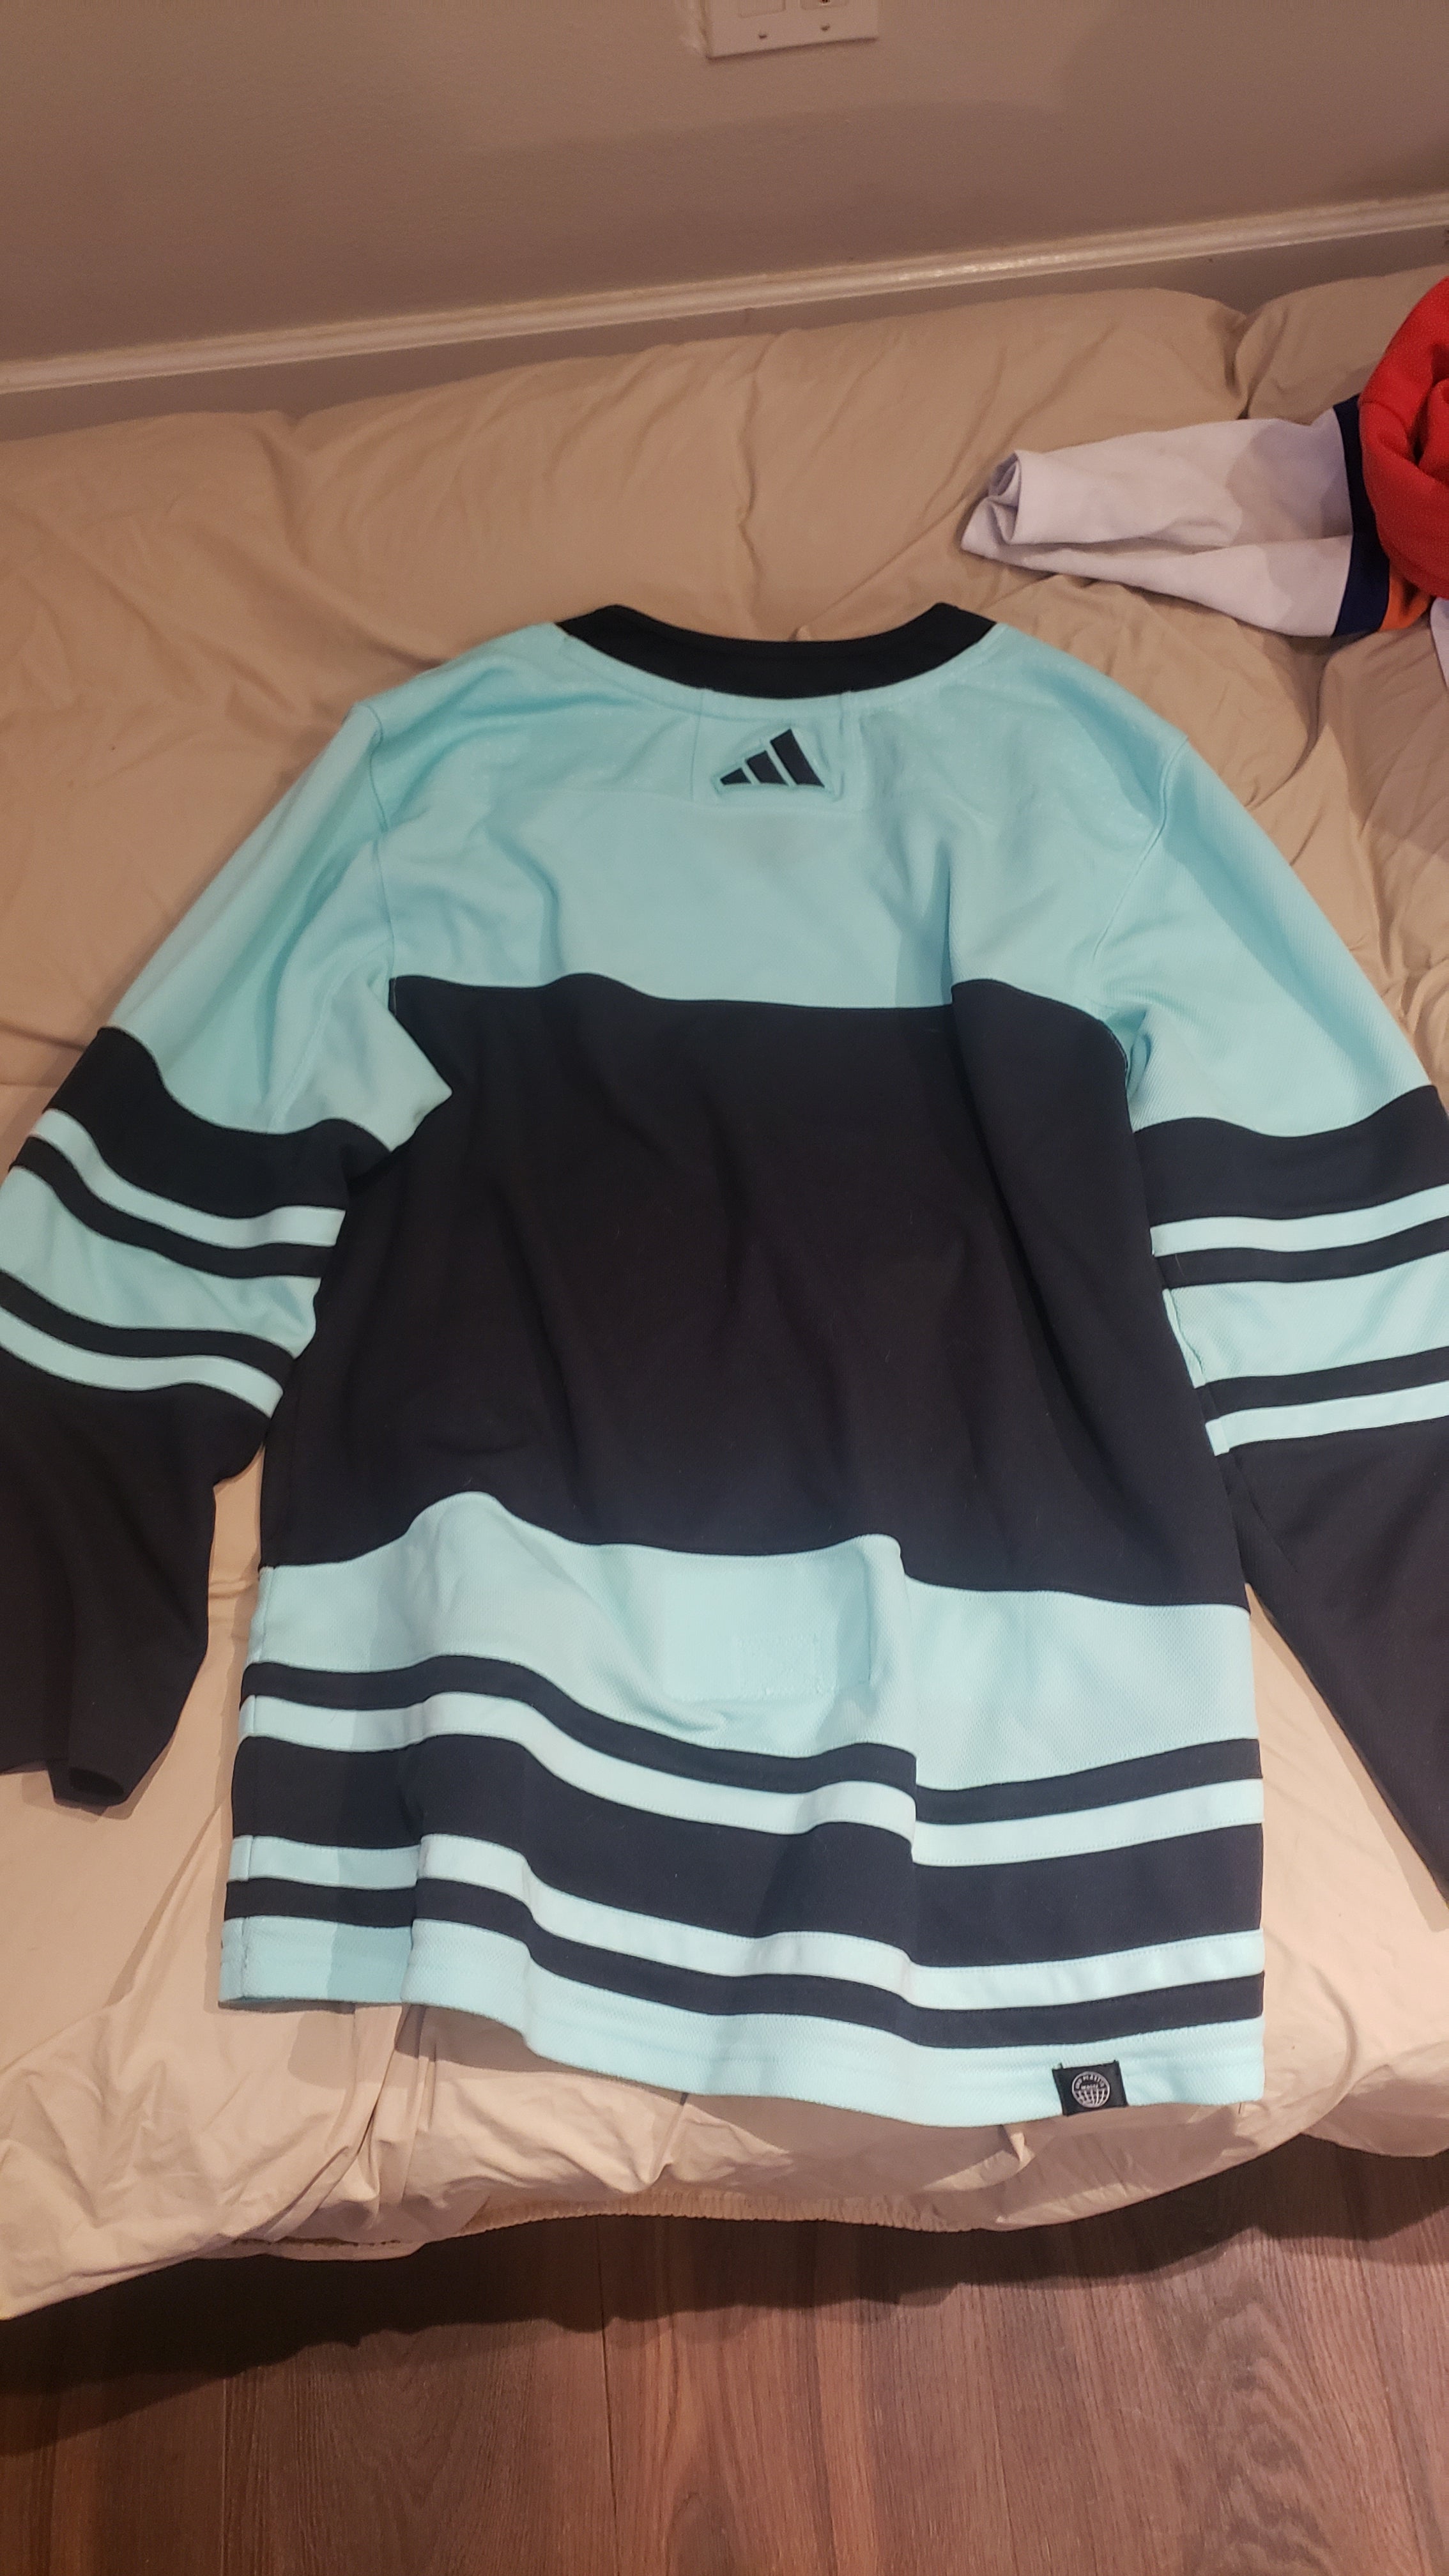 Men's Adidas Gray Seattle Kraken Reverse Retro 2.0 Vintage Pullover Sweatshirt